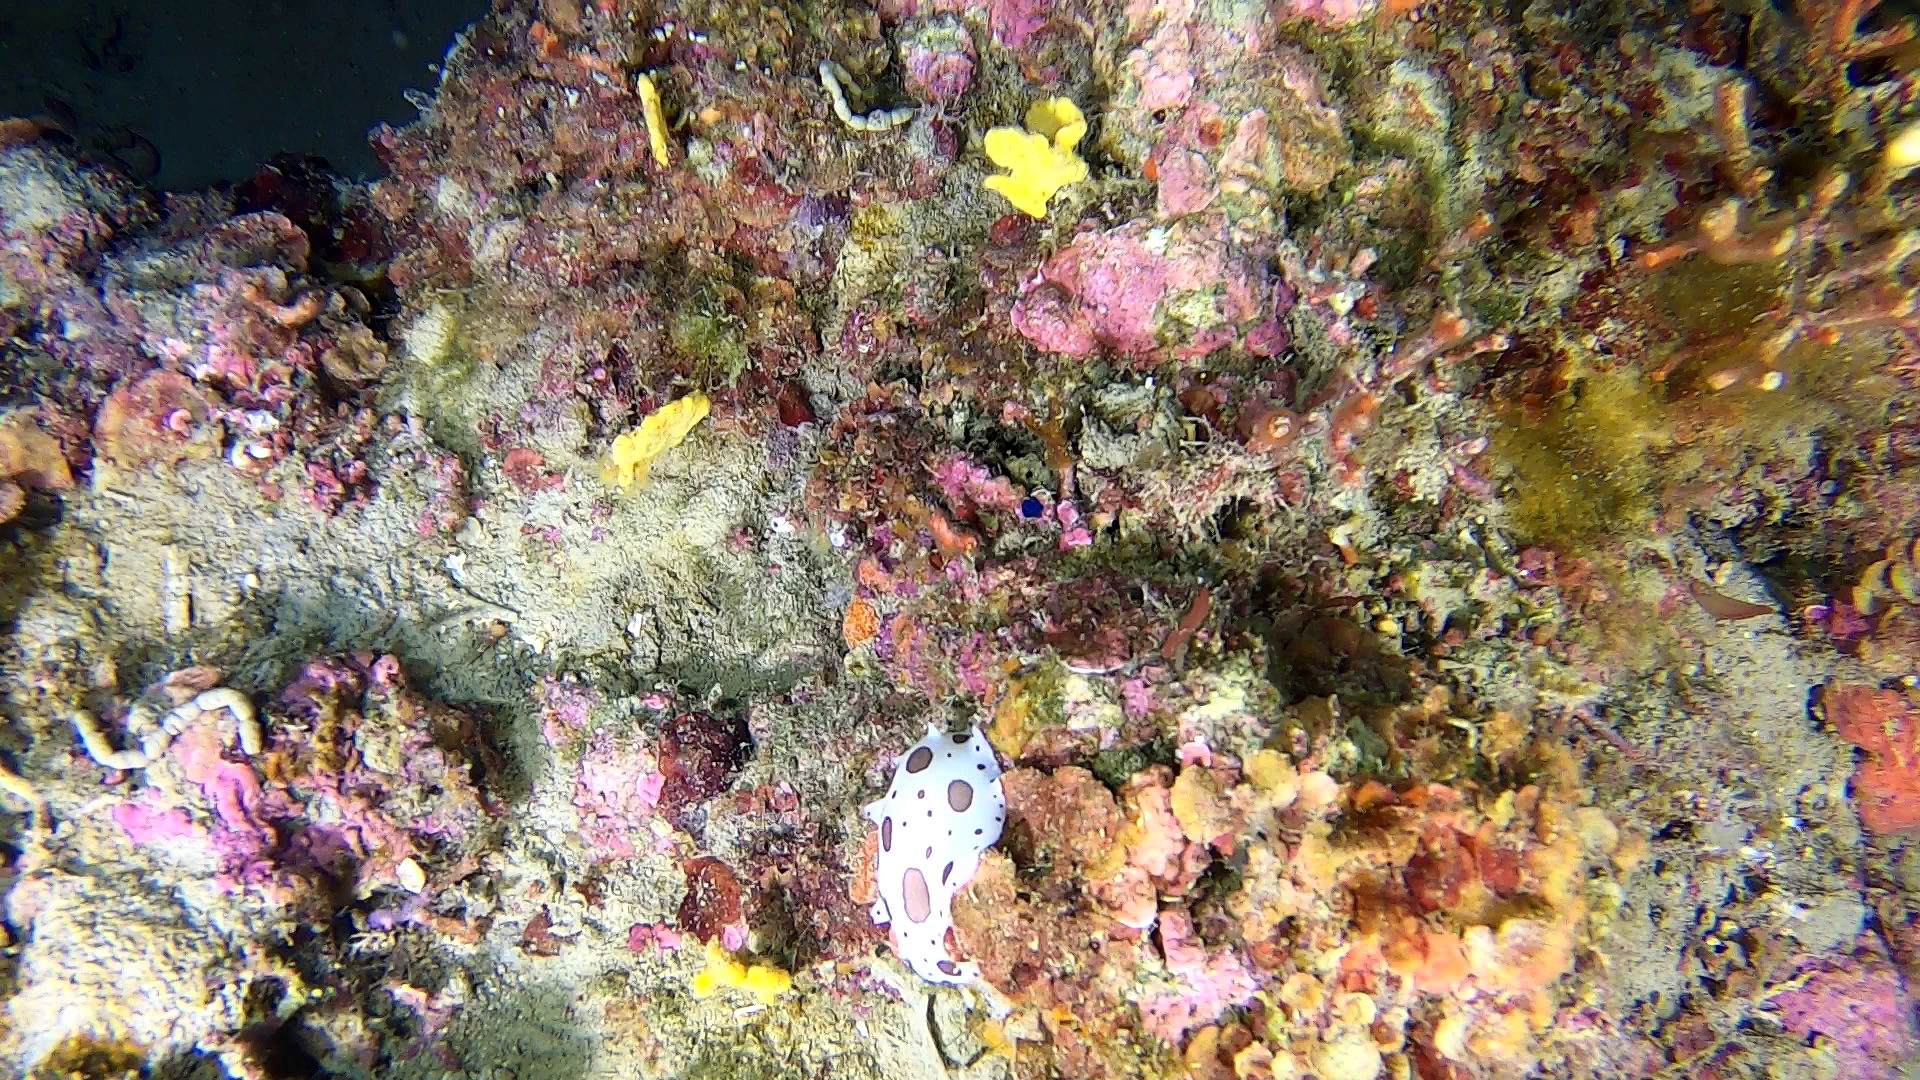 Peltodoris atromaculata - Discodoris atromaculata - Vacchetta di mare - Mucca di mare - Lumaca di mare maculata - Dotted sea slug - sea Cow - intotheblue.it